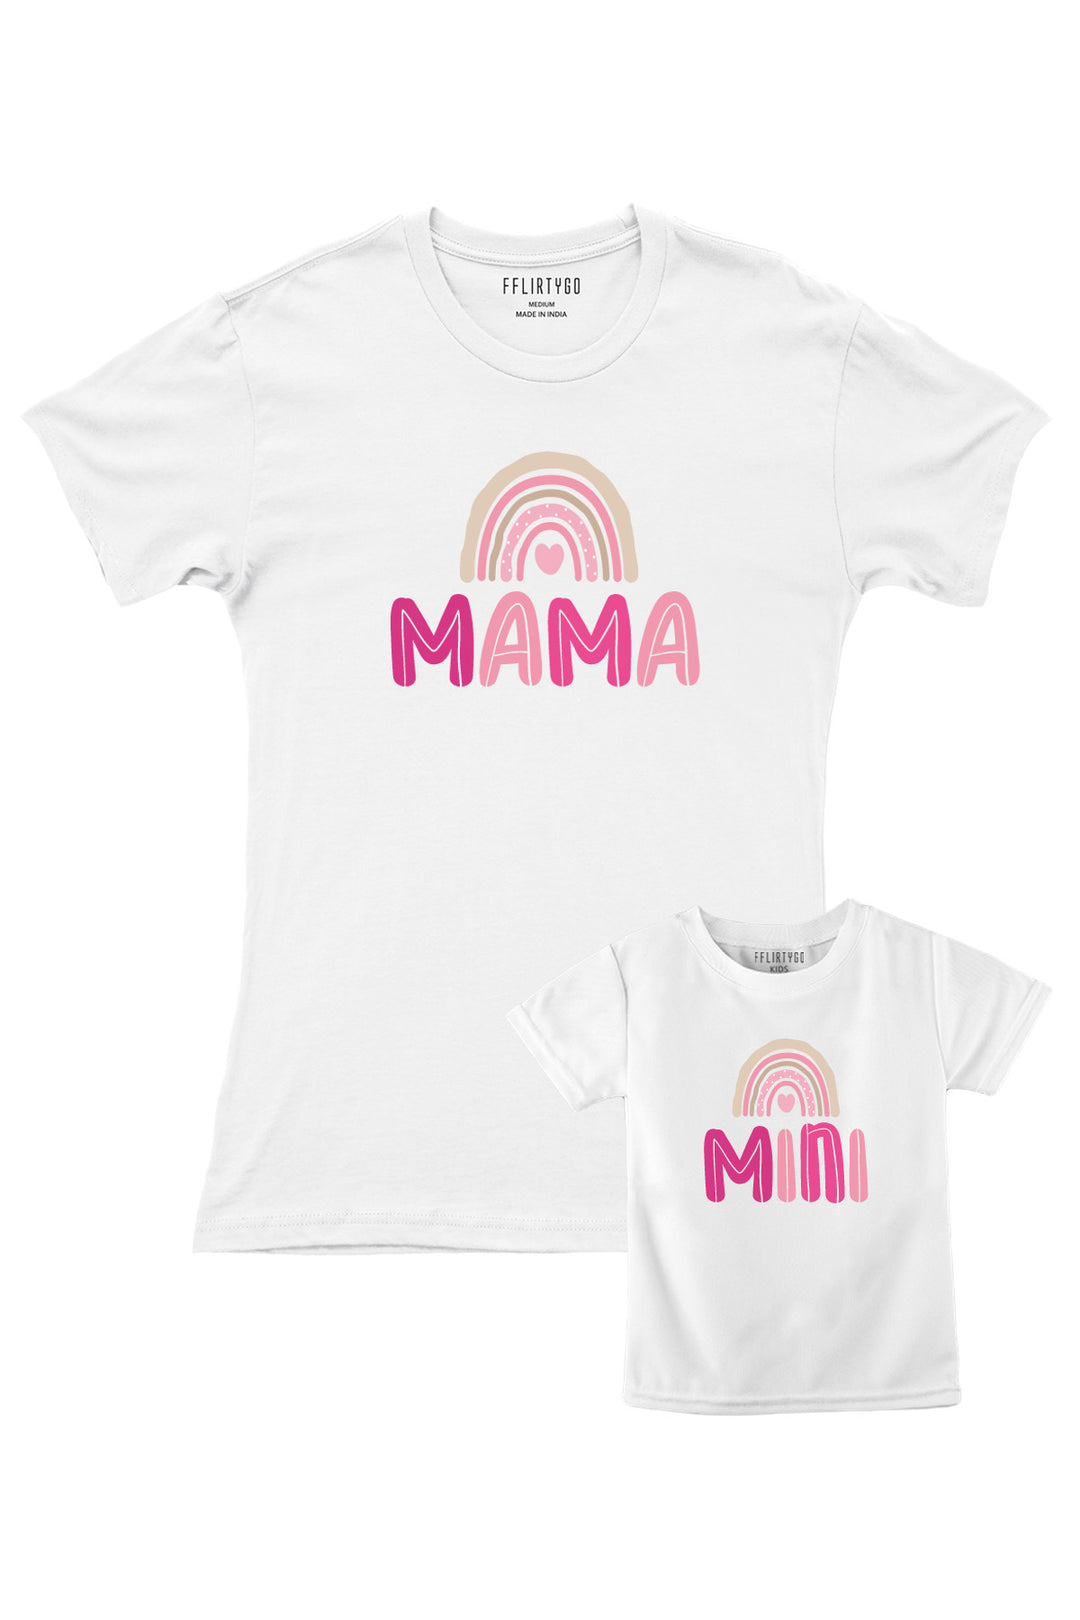 Mama - Mini